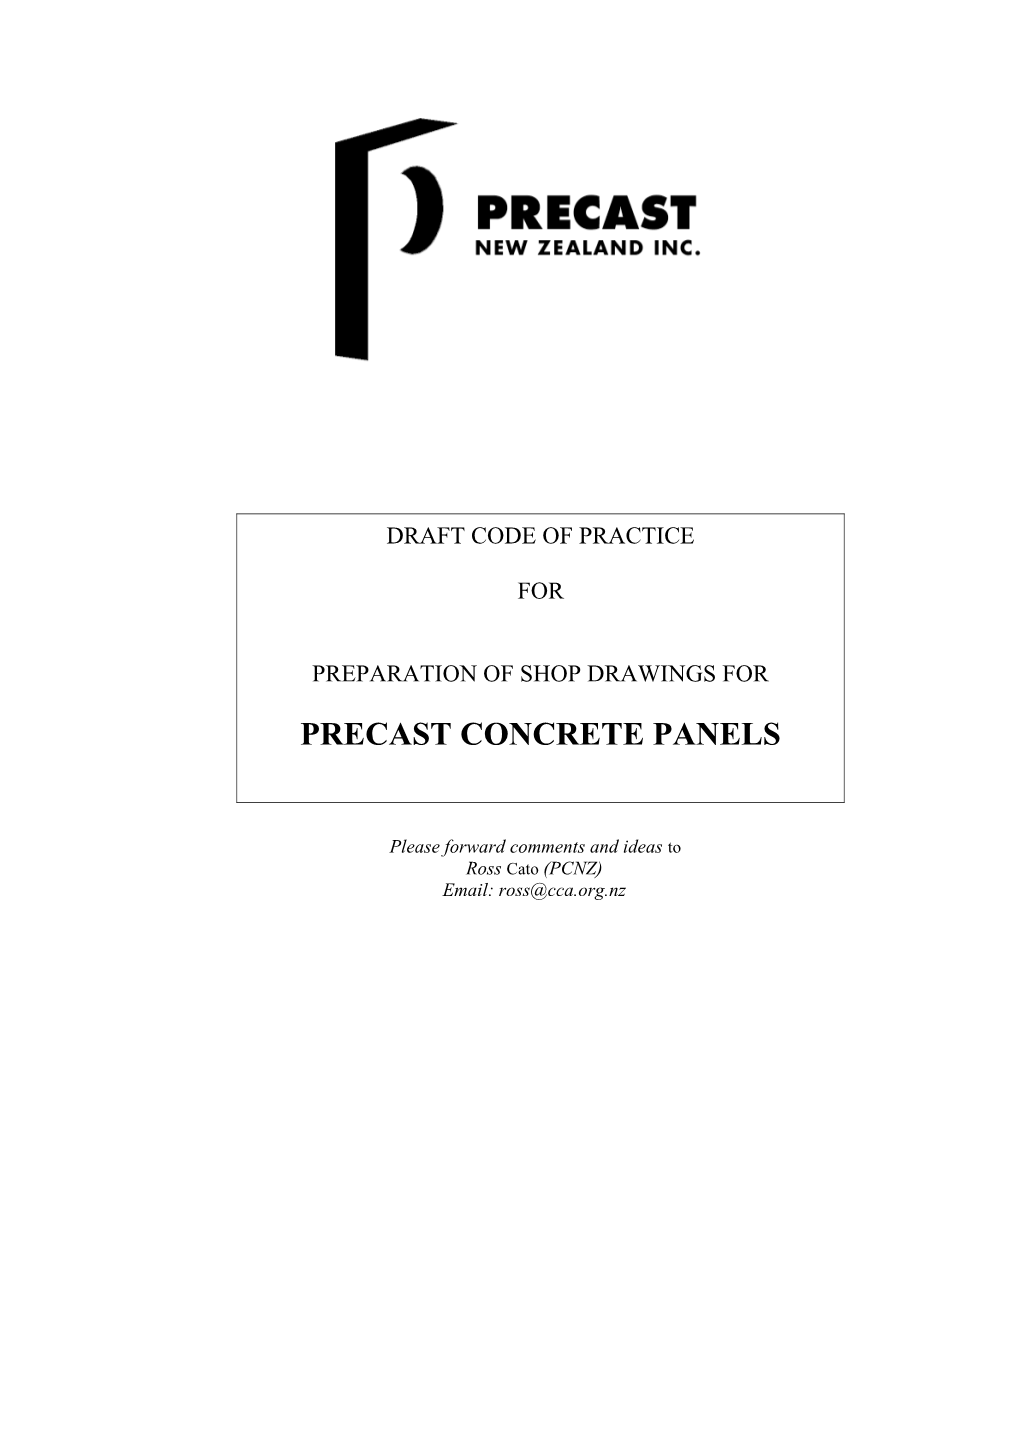 Preparation of Shop Drawings for Precast Concrete Panels